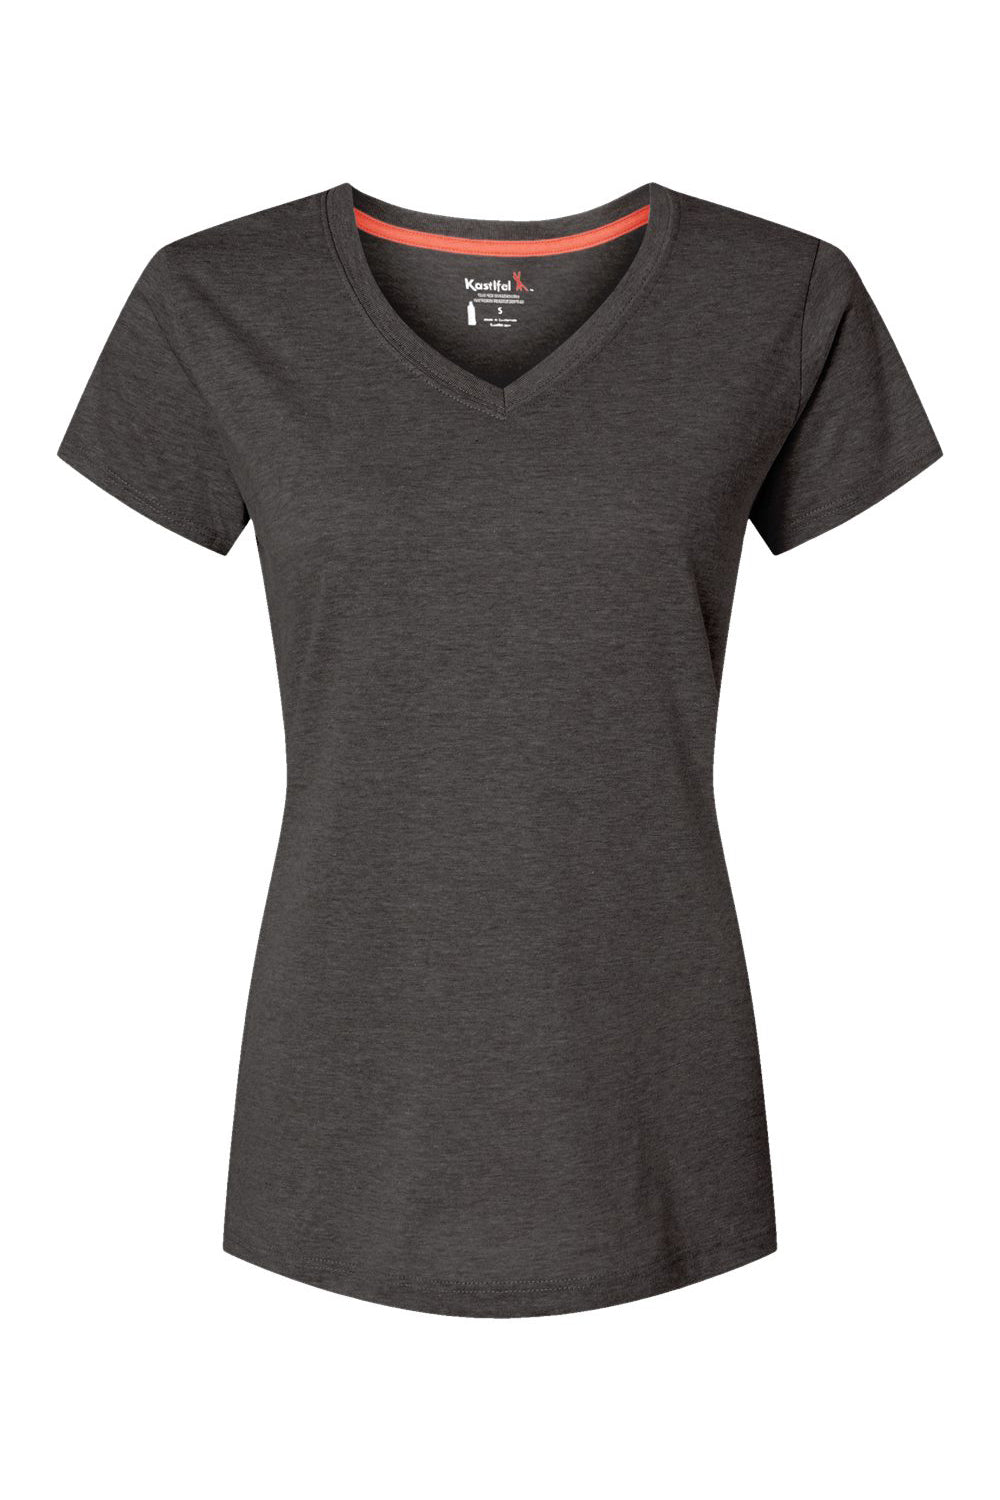 Kastlfel 2011 Womens RecycledSoft Short Sleeve V-Neck T-Shirt Carbon Grey Flat Front